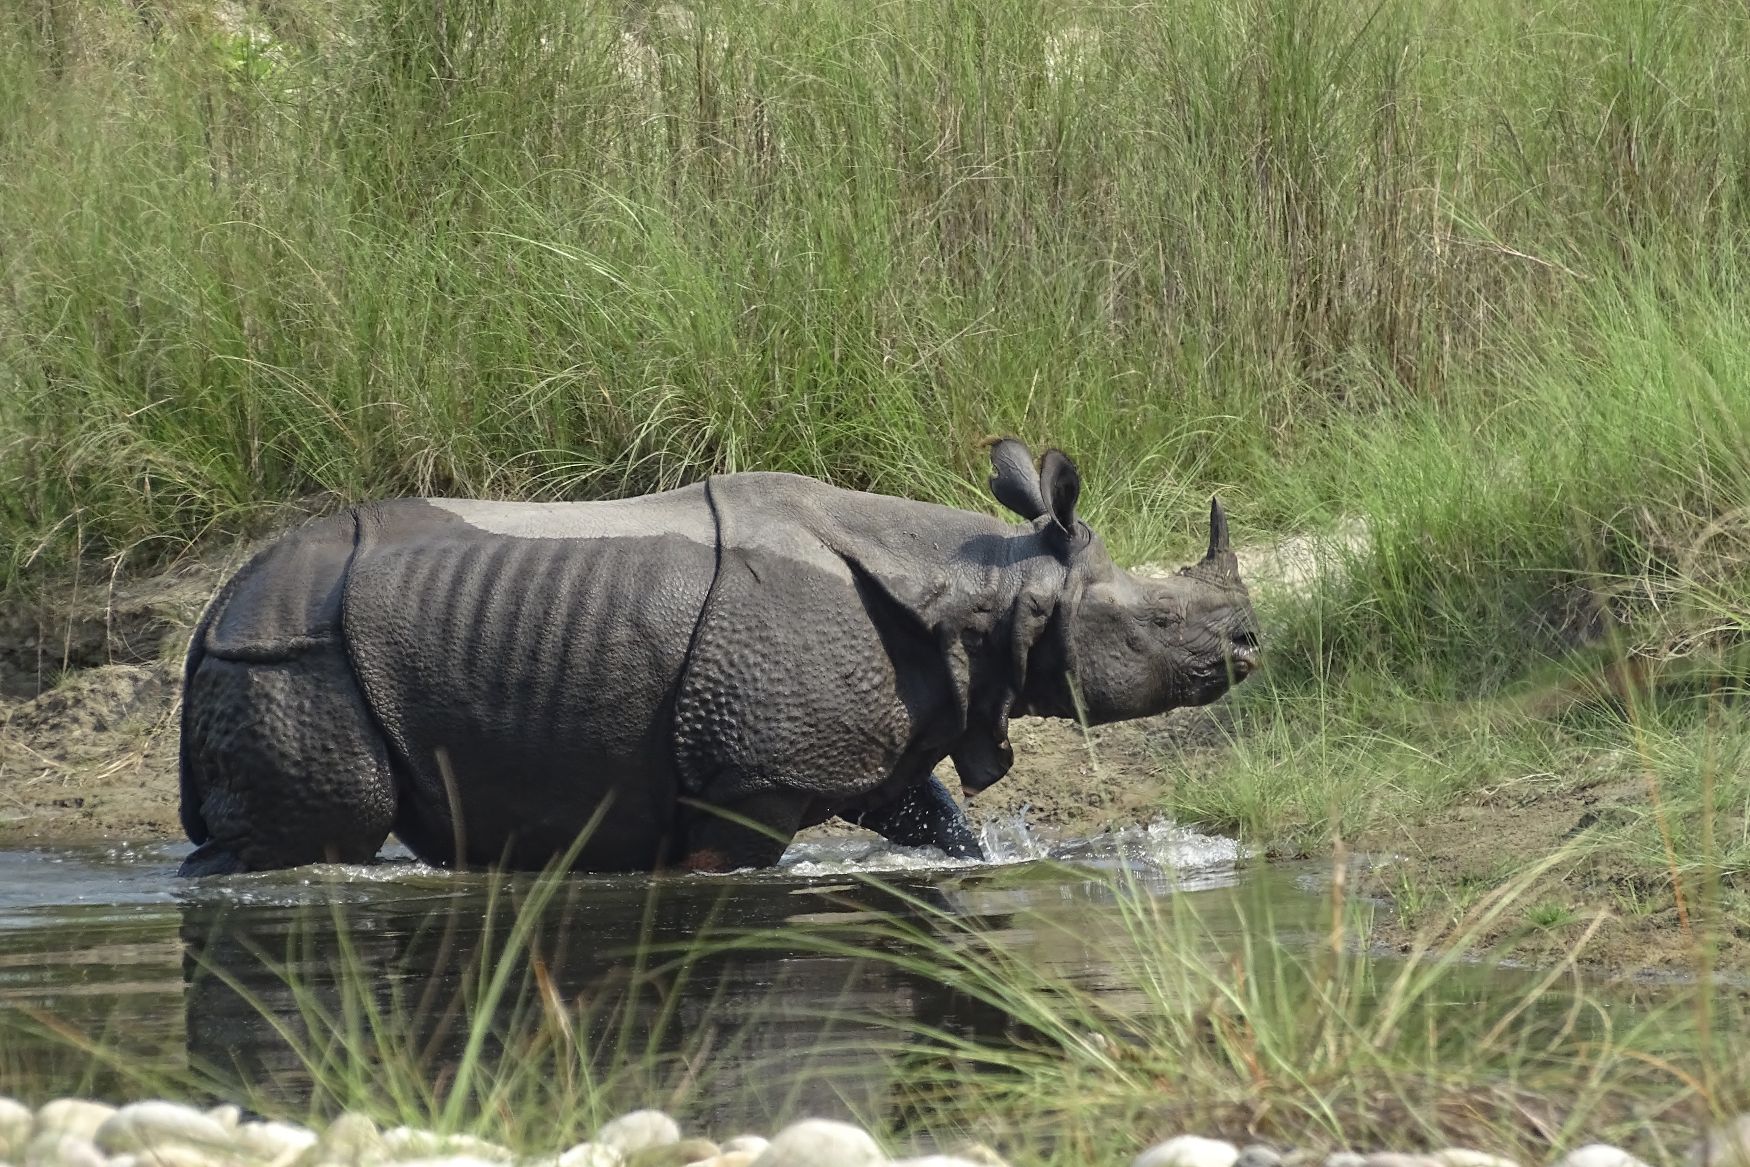 Greater One horned Rhino Nepal Bardia National Park